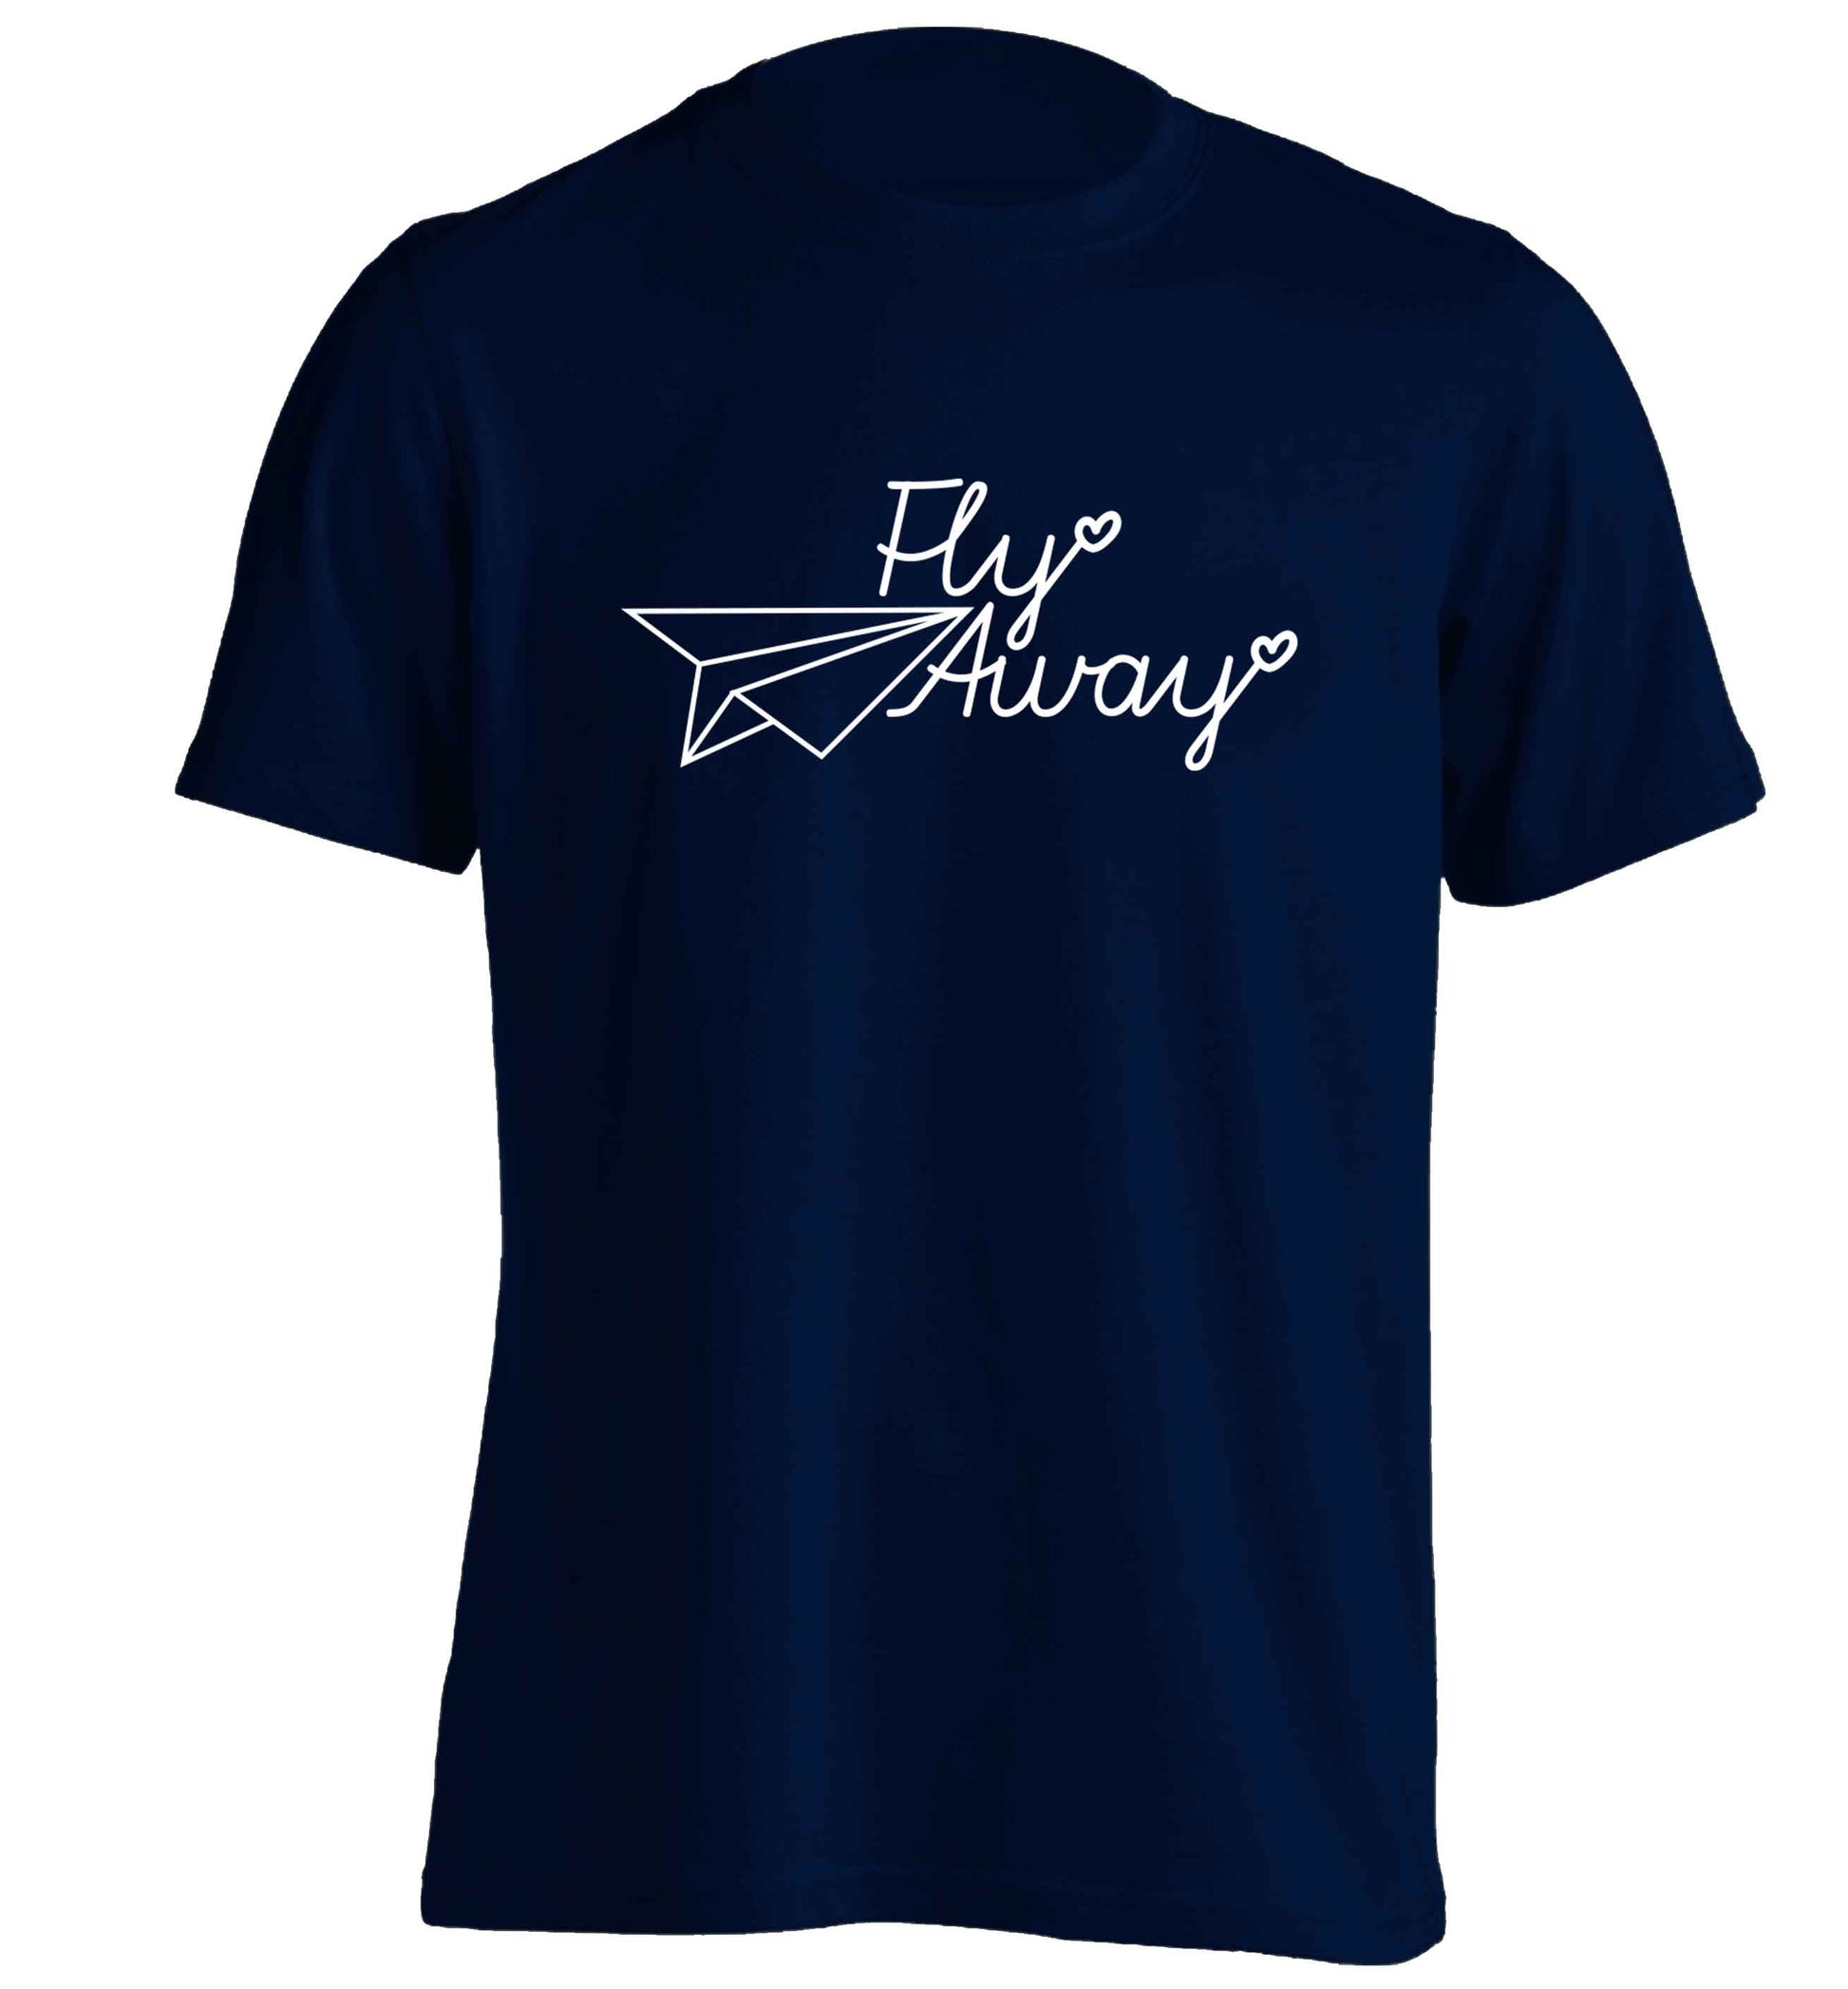 Fly away adults unisex navy Tshirt 2XL